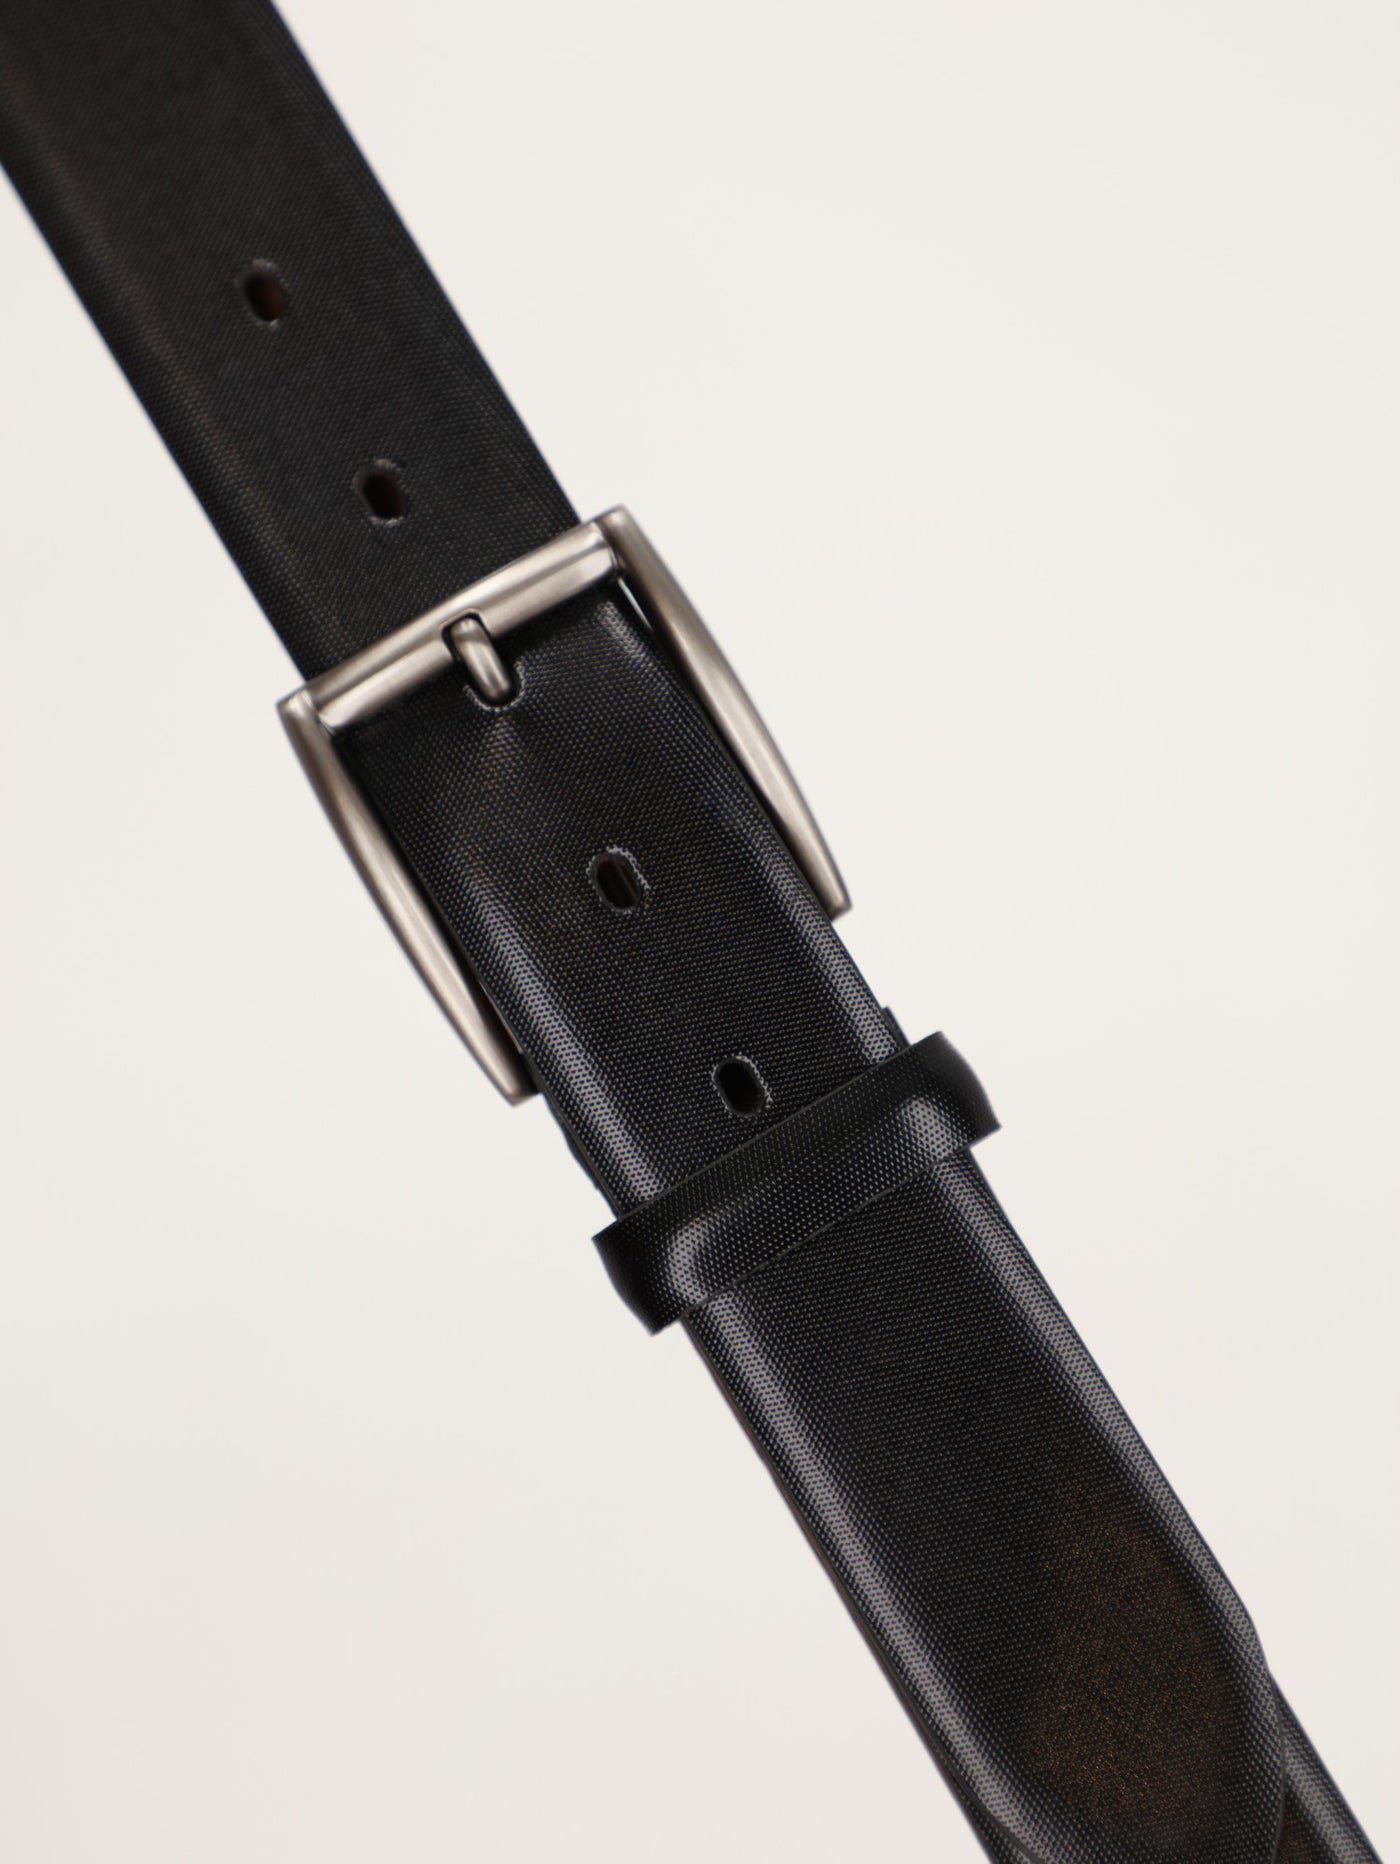 Square Buckel Leather Belt